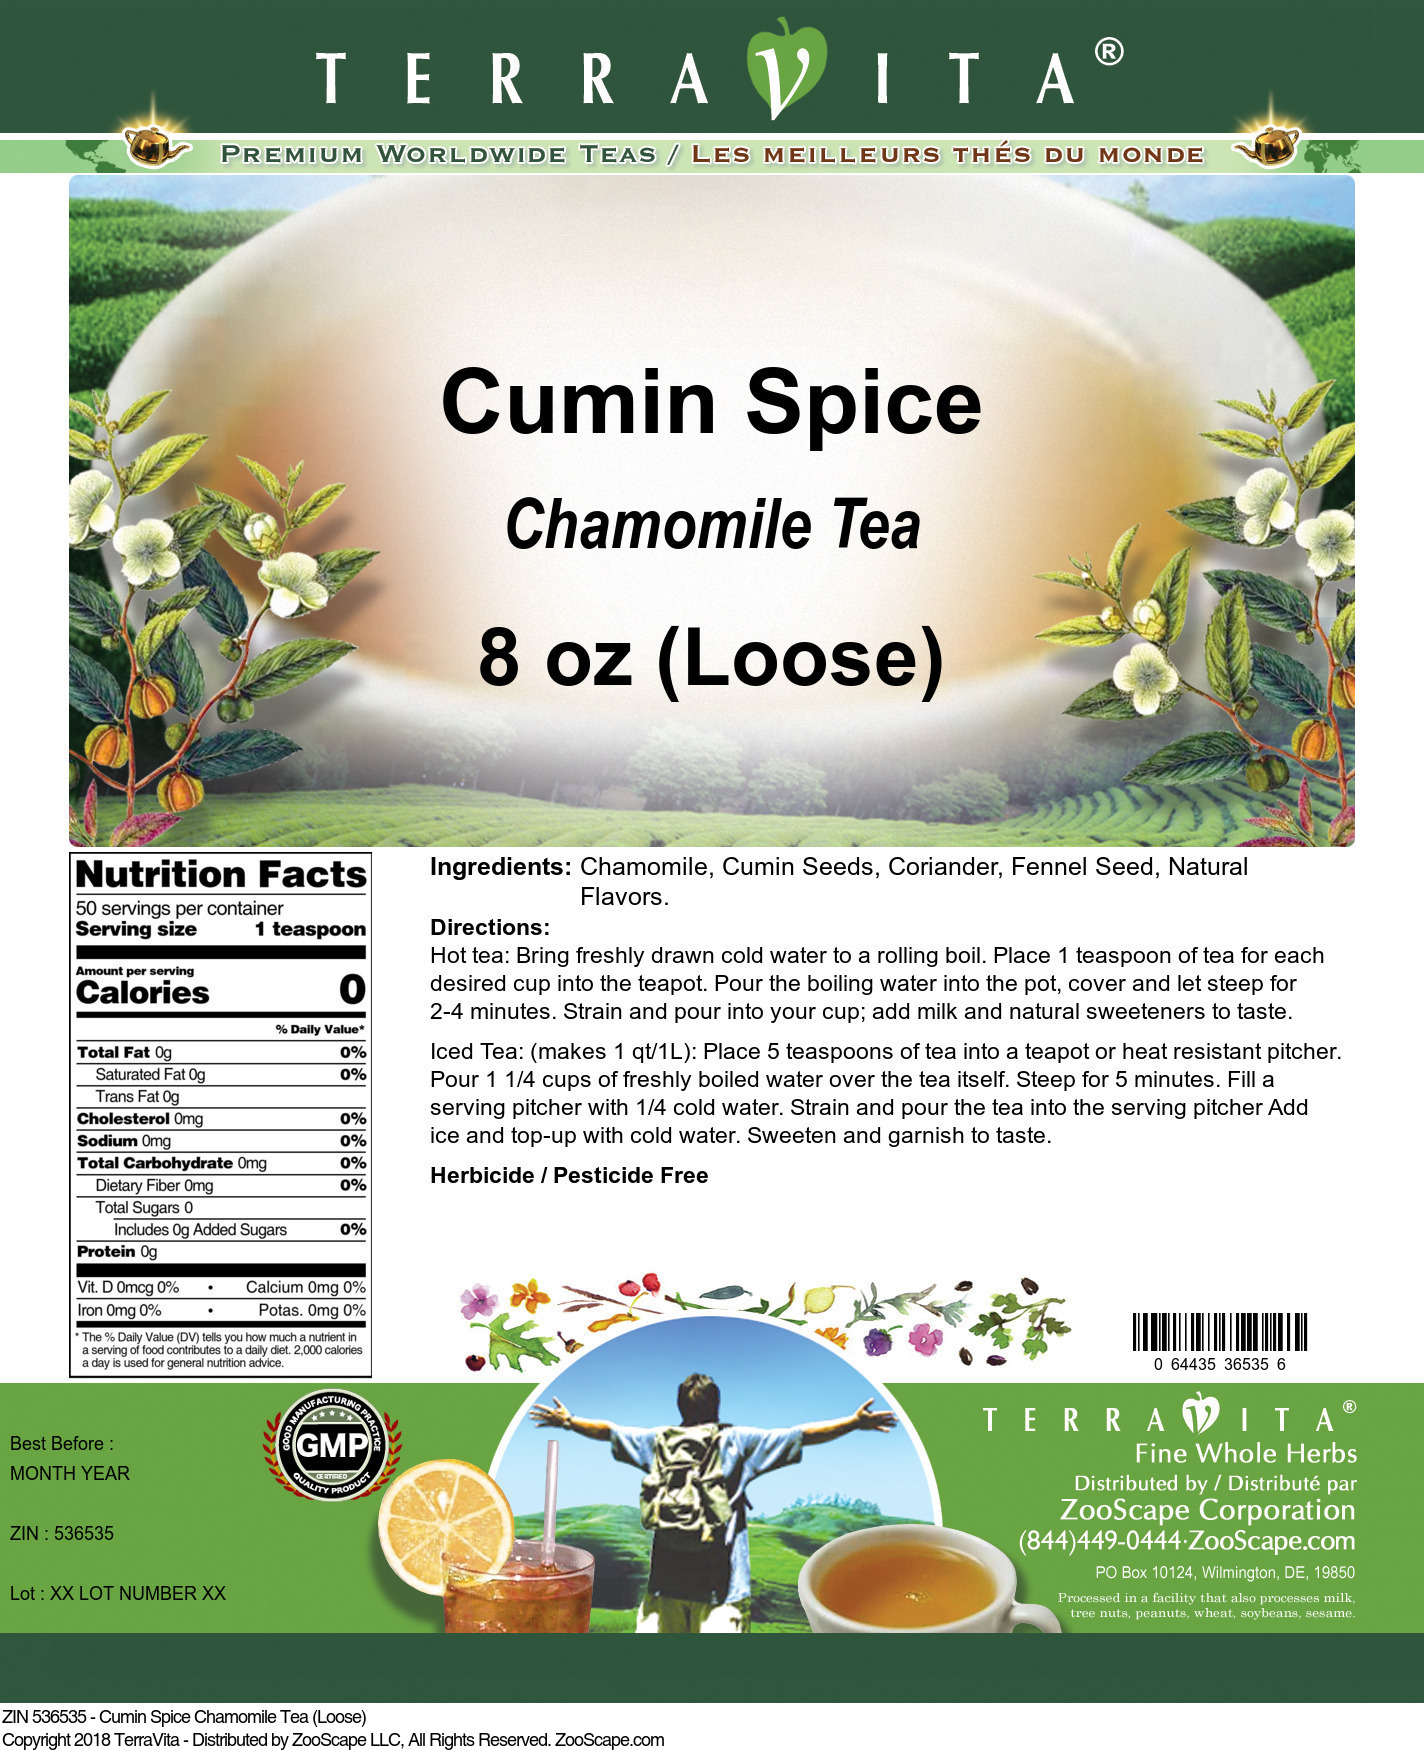 Cumin Spice Chamomile Tea (Loose) - Label